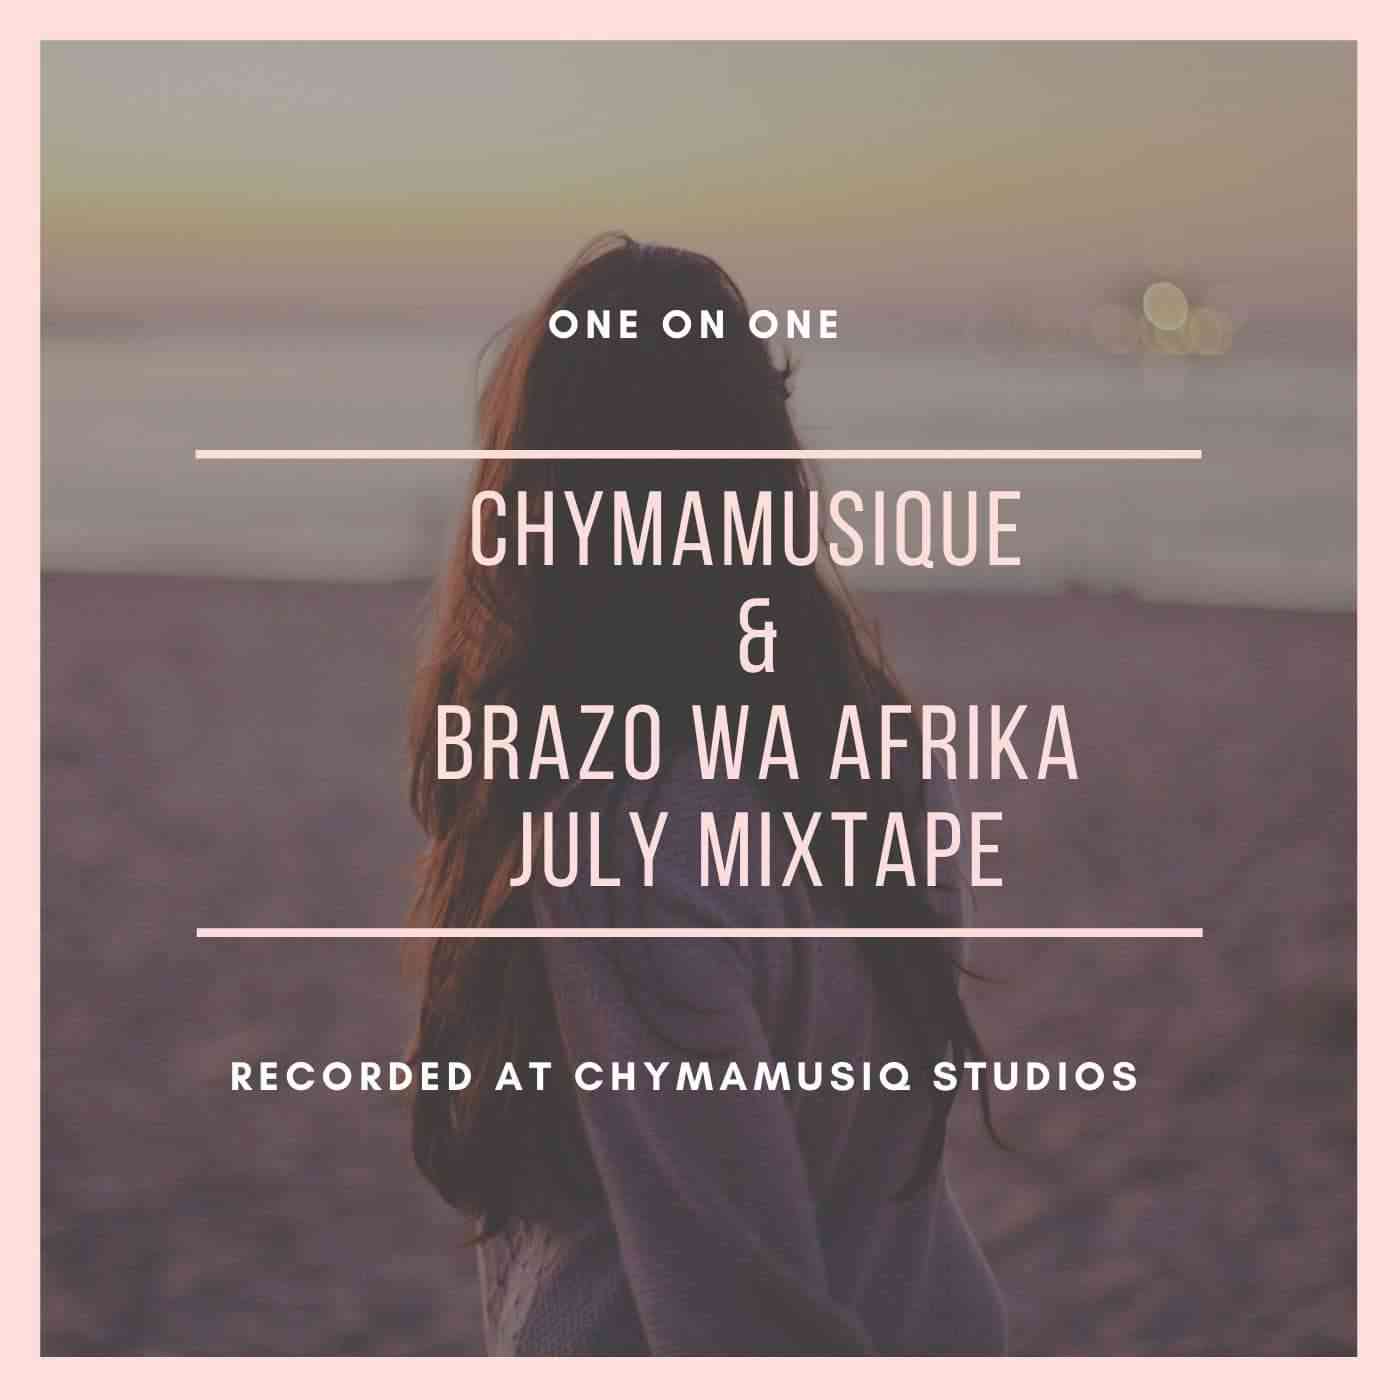 Chymamusique & Brazo Wa Afrika July Mixtape (One on One) 